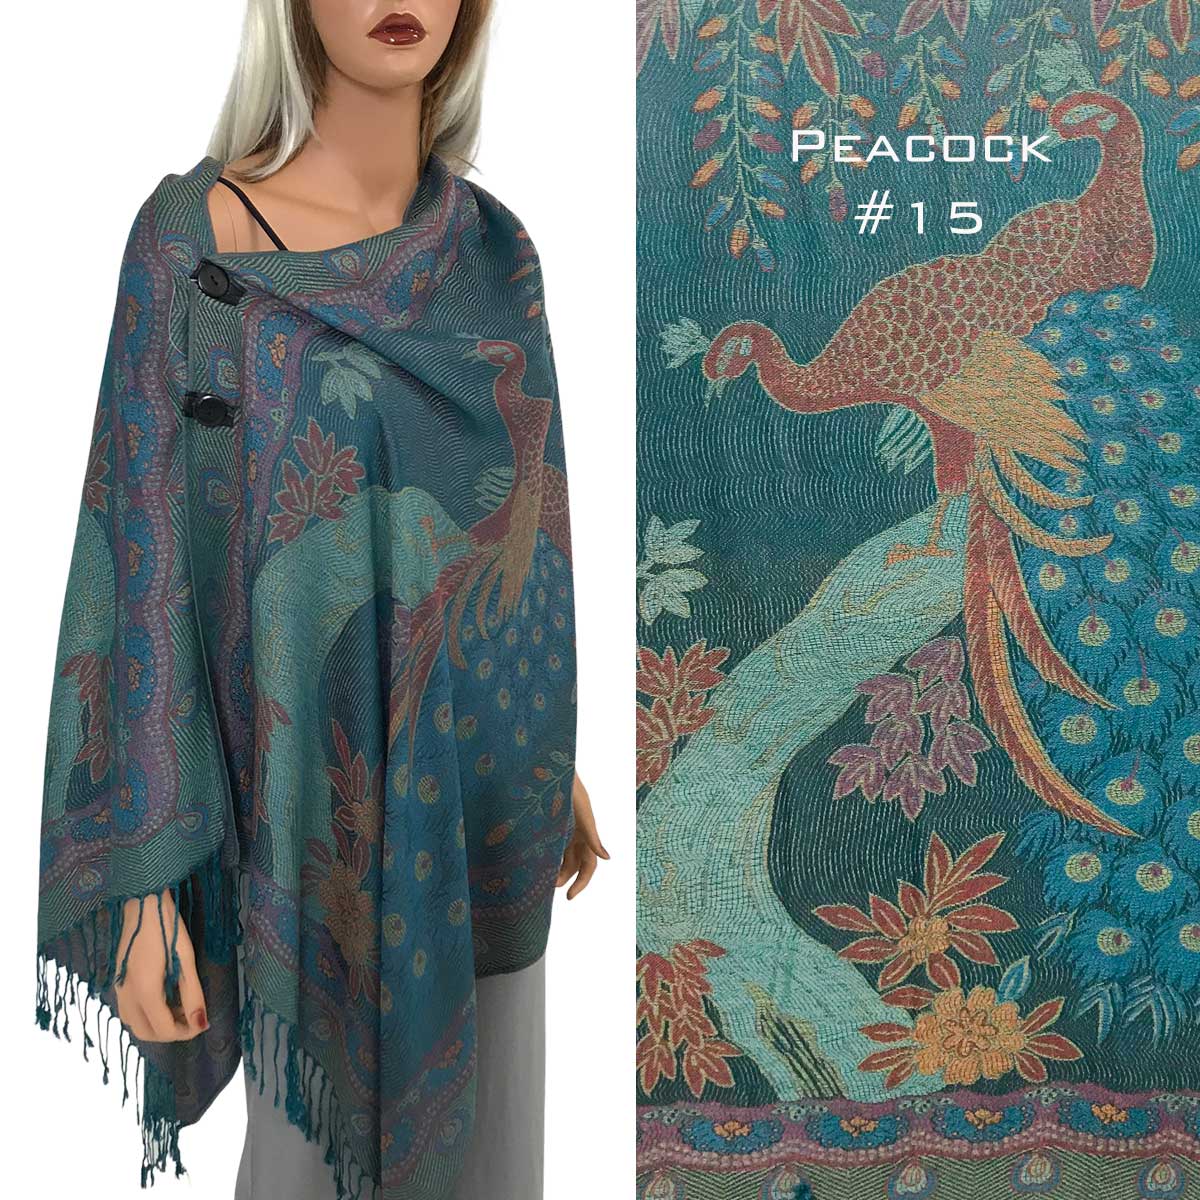 Peacock - #15<br>Pashmina Style Button Shawl
